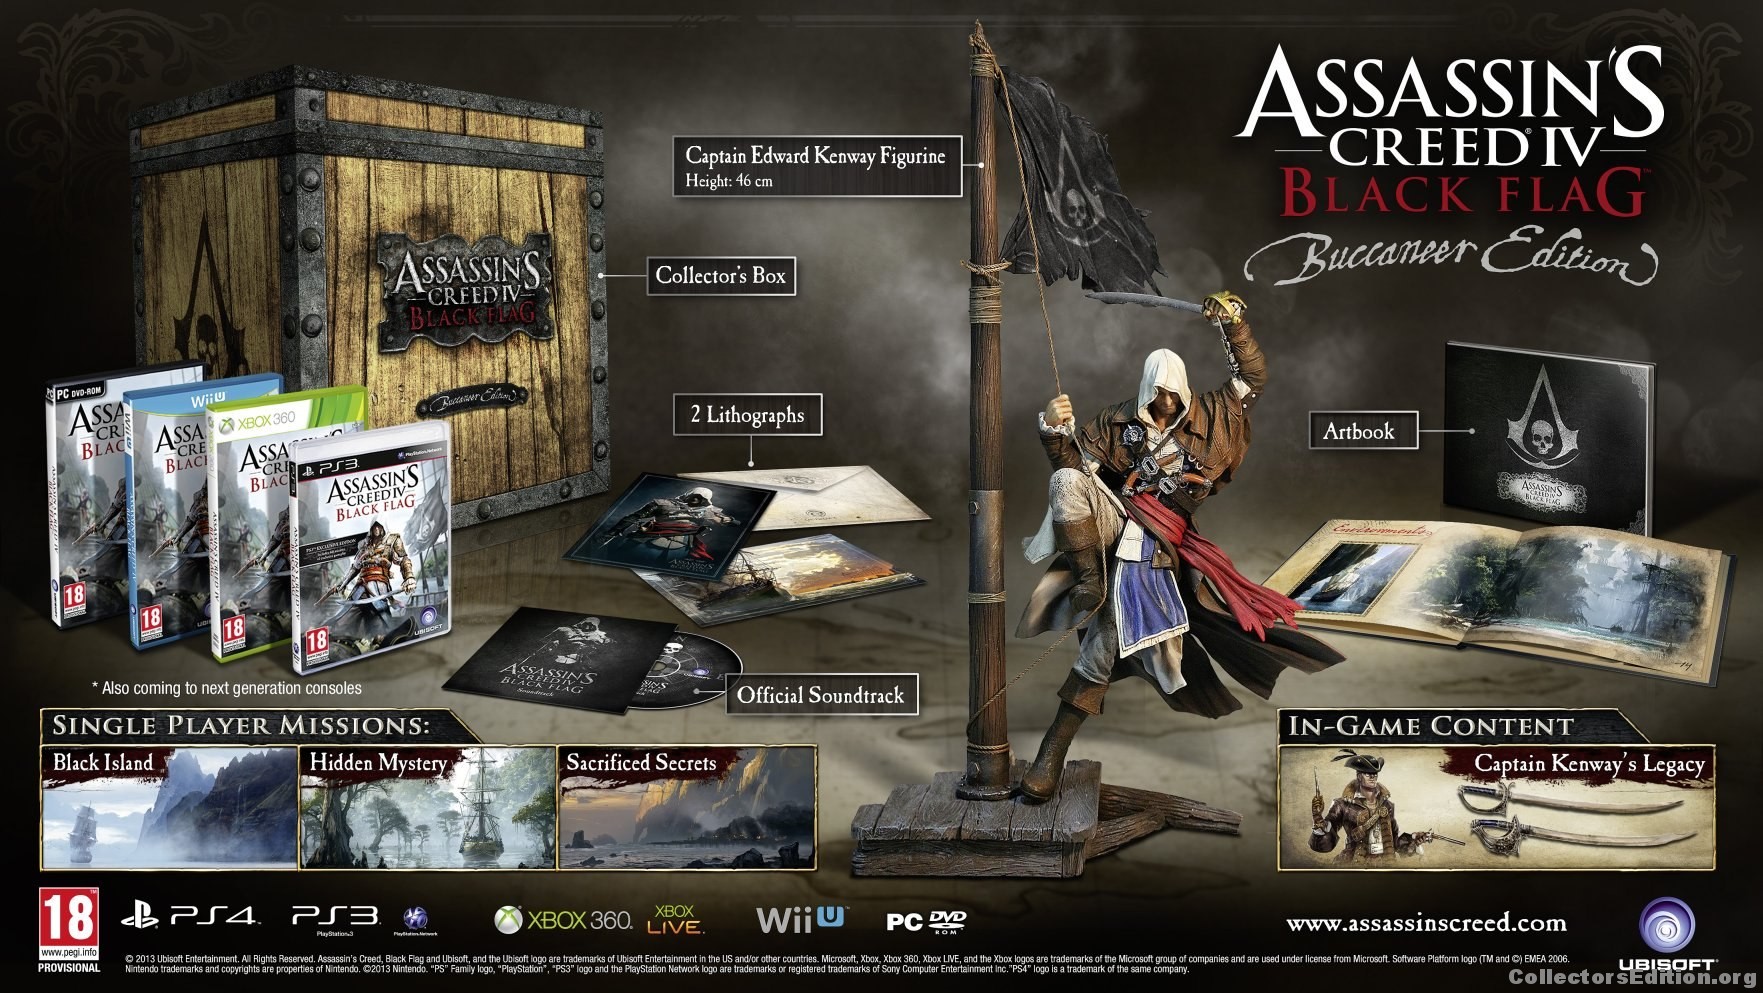 Assassins Creed Black Flag Buccaneer Edition (WiiU) - Figurák Special Edition